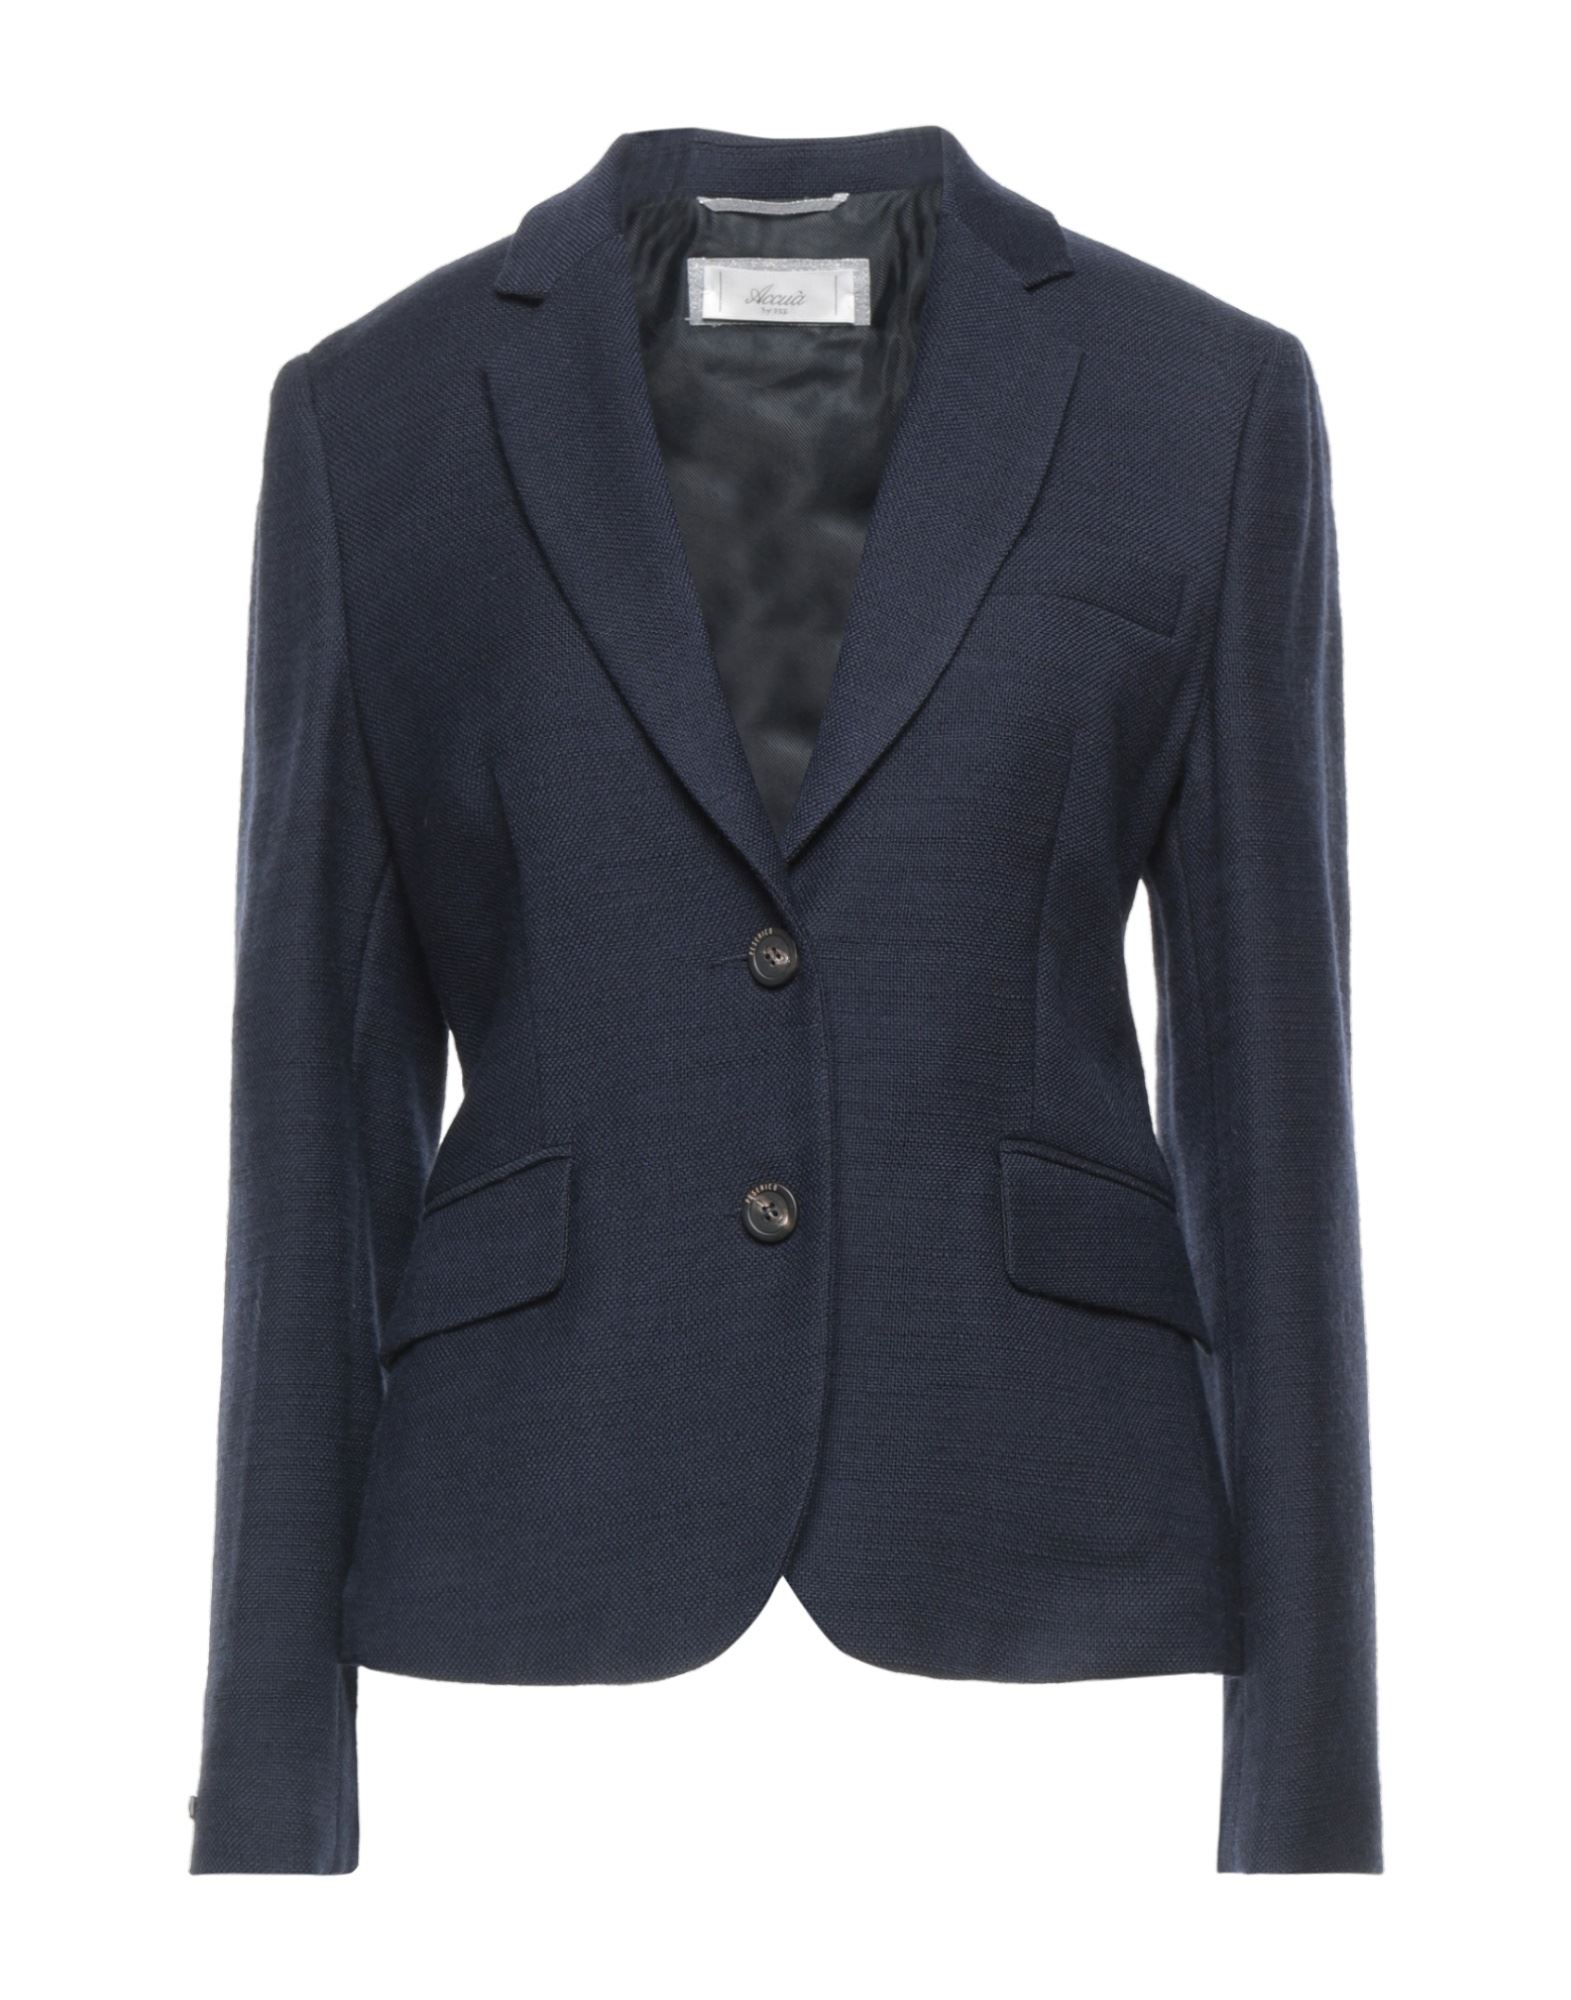 Accuà By Psr Woman Suit Jacket Midnight Blue Size 12 Virgin Wool, Wool